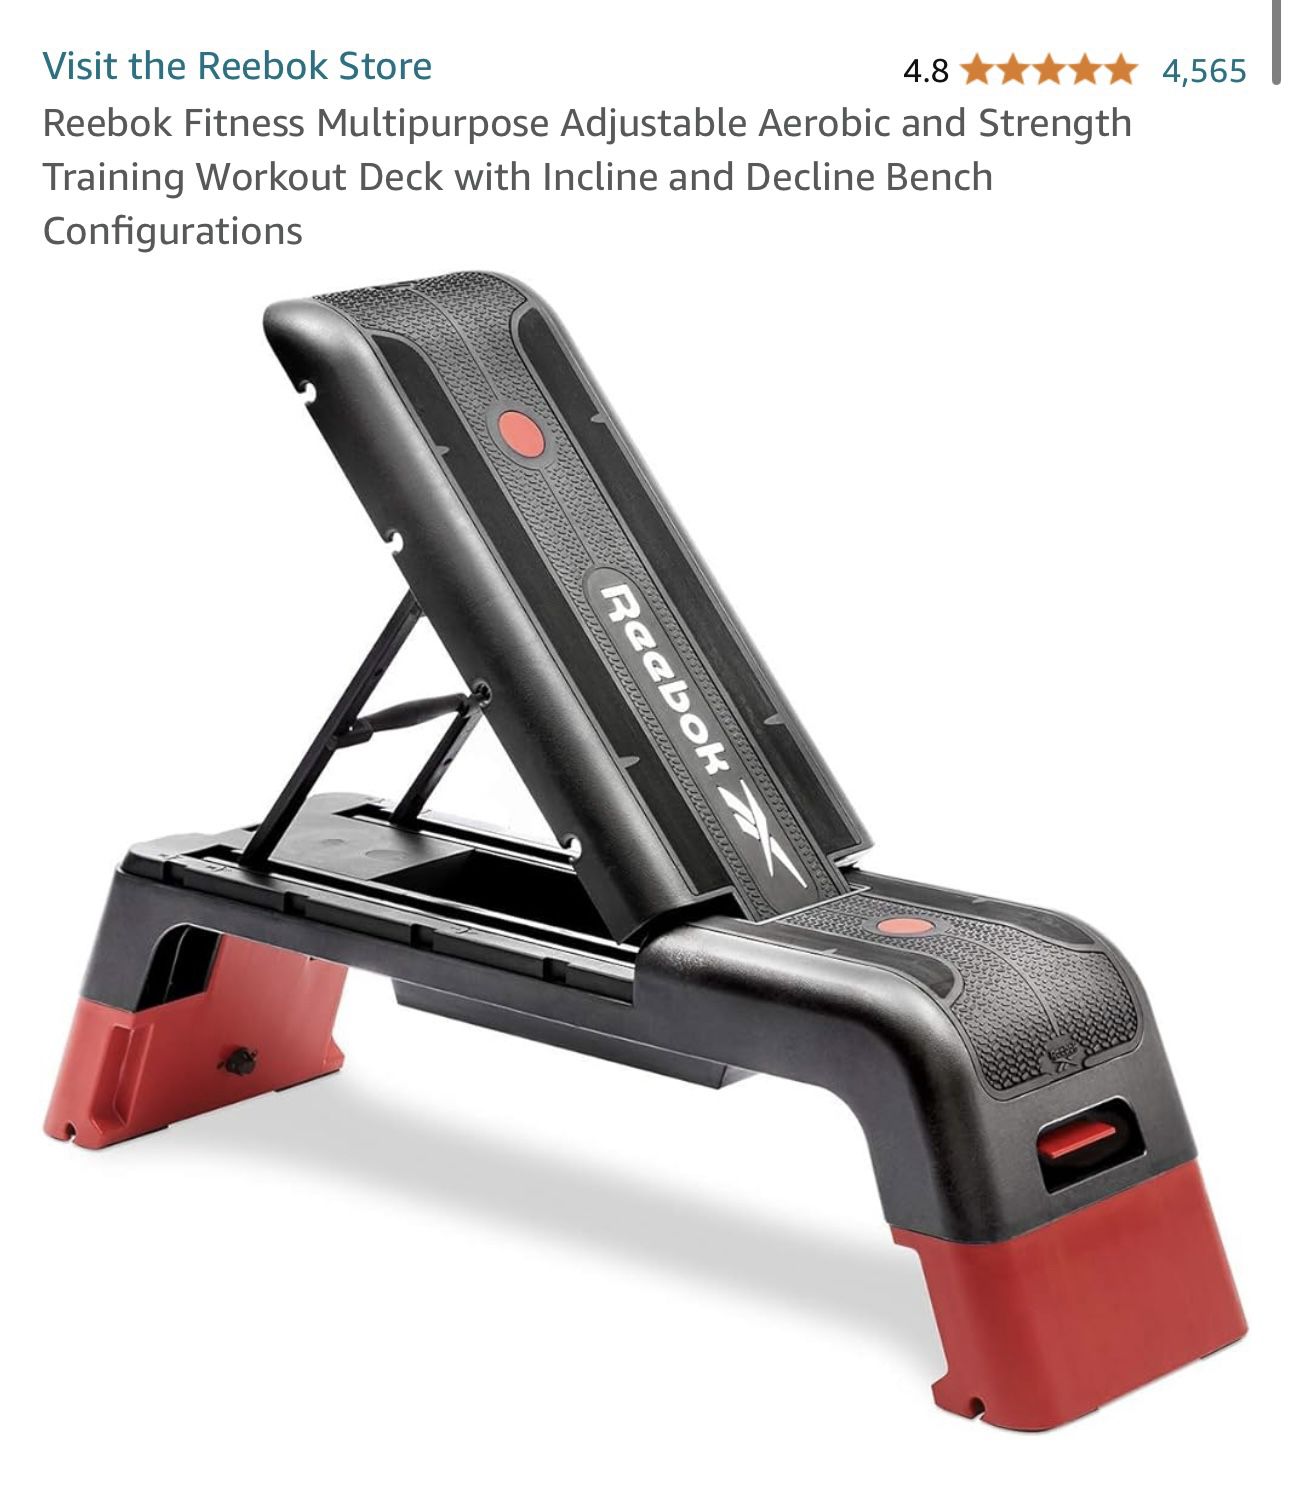 Reebok Fitness Adjustable Workout Deck